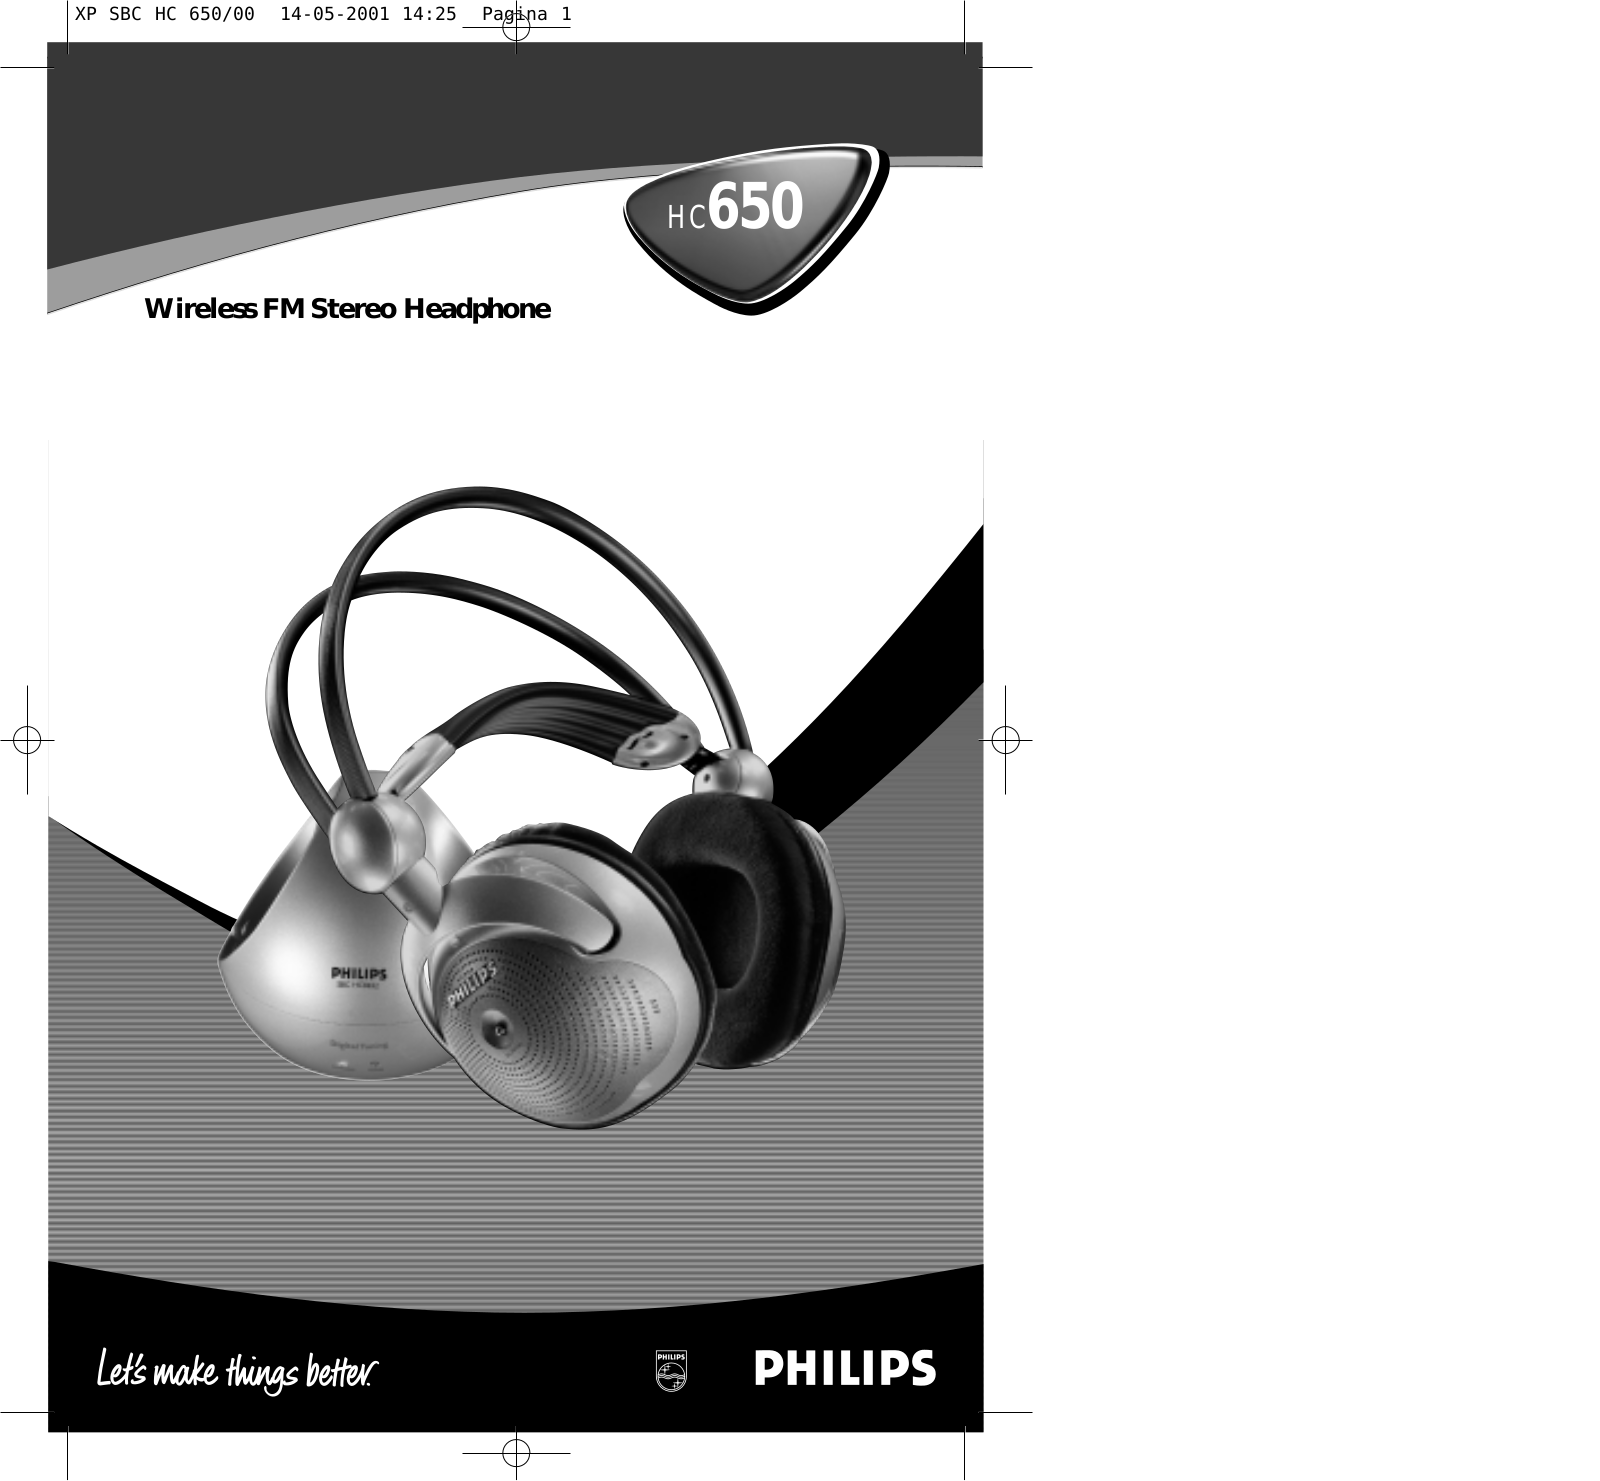 Philips HC650 User Manual